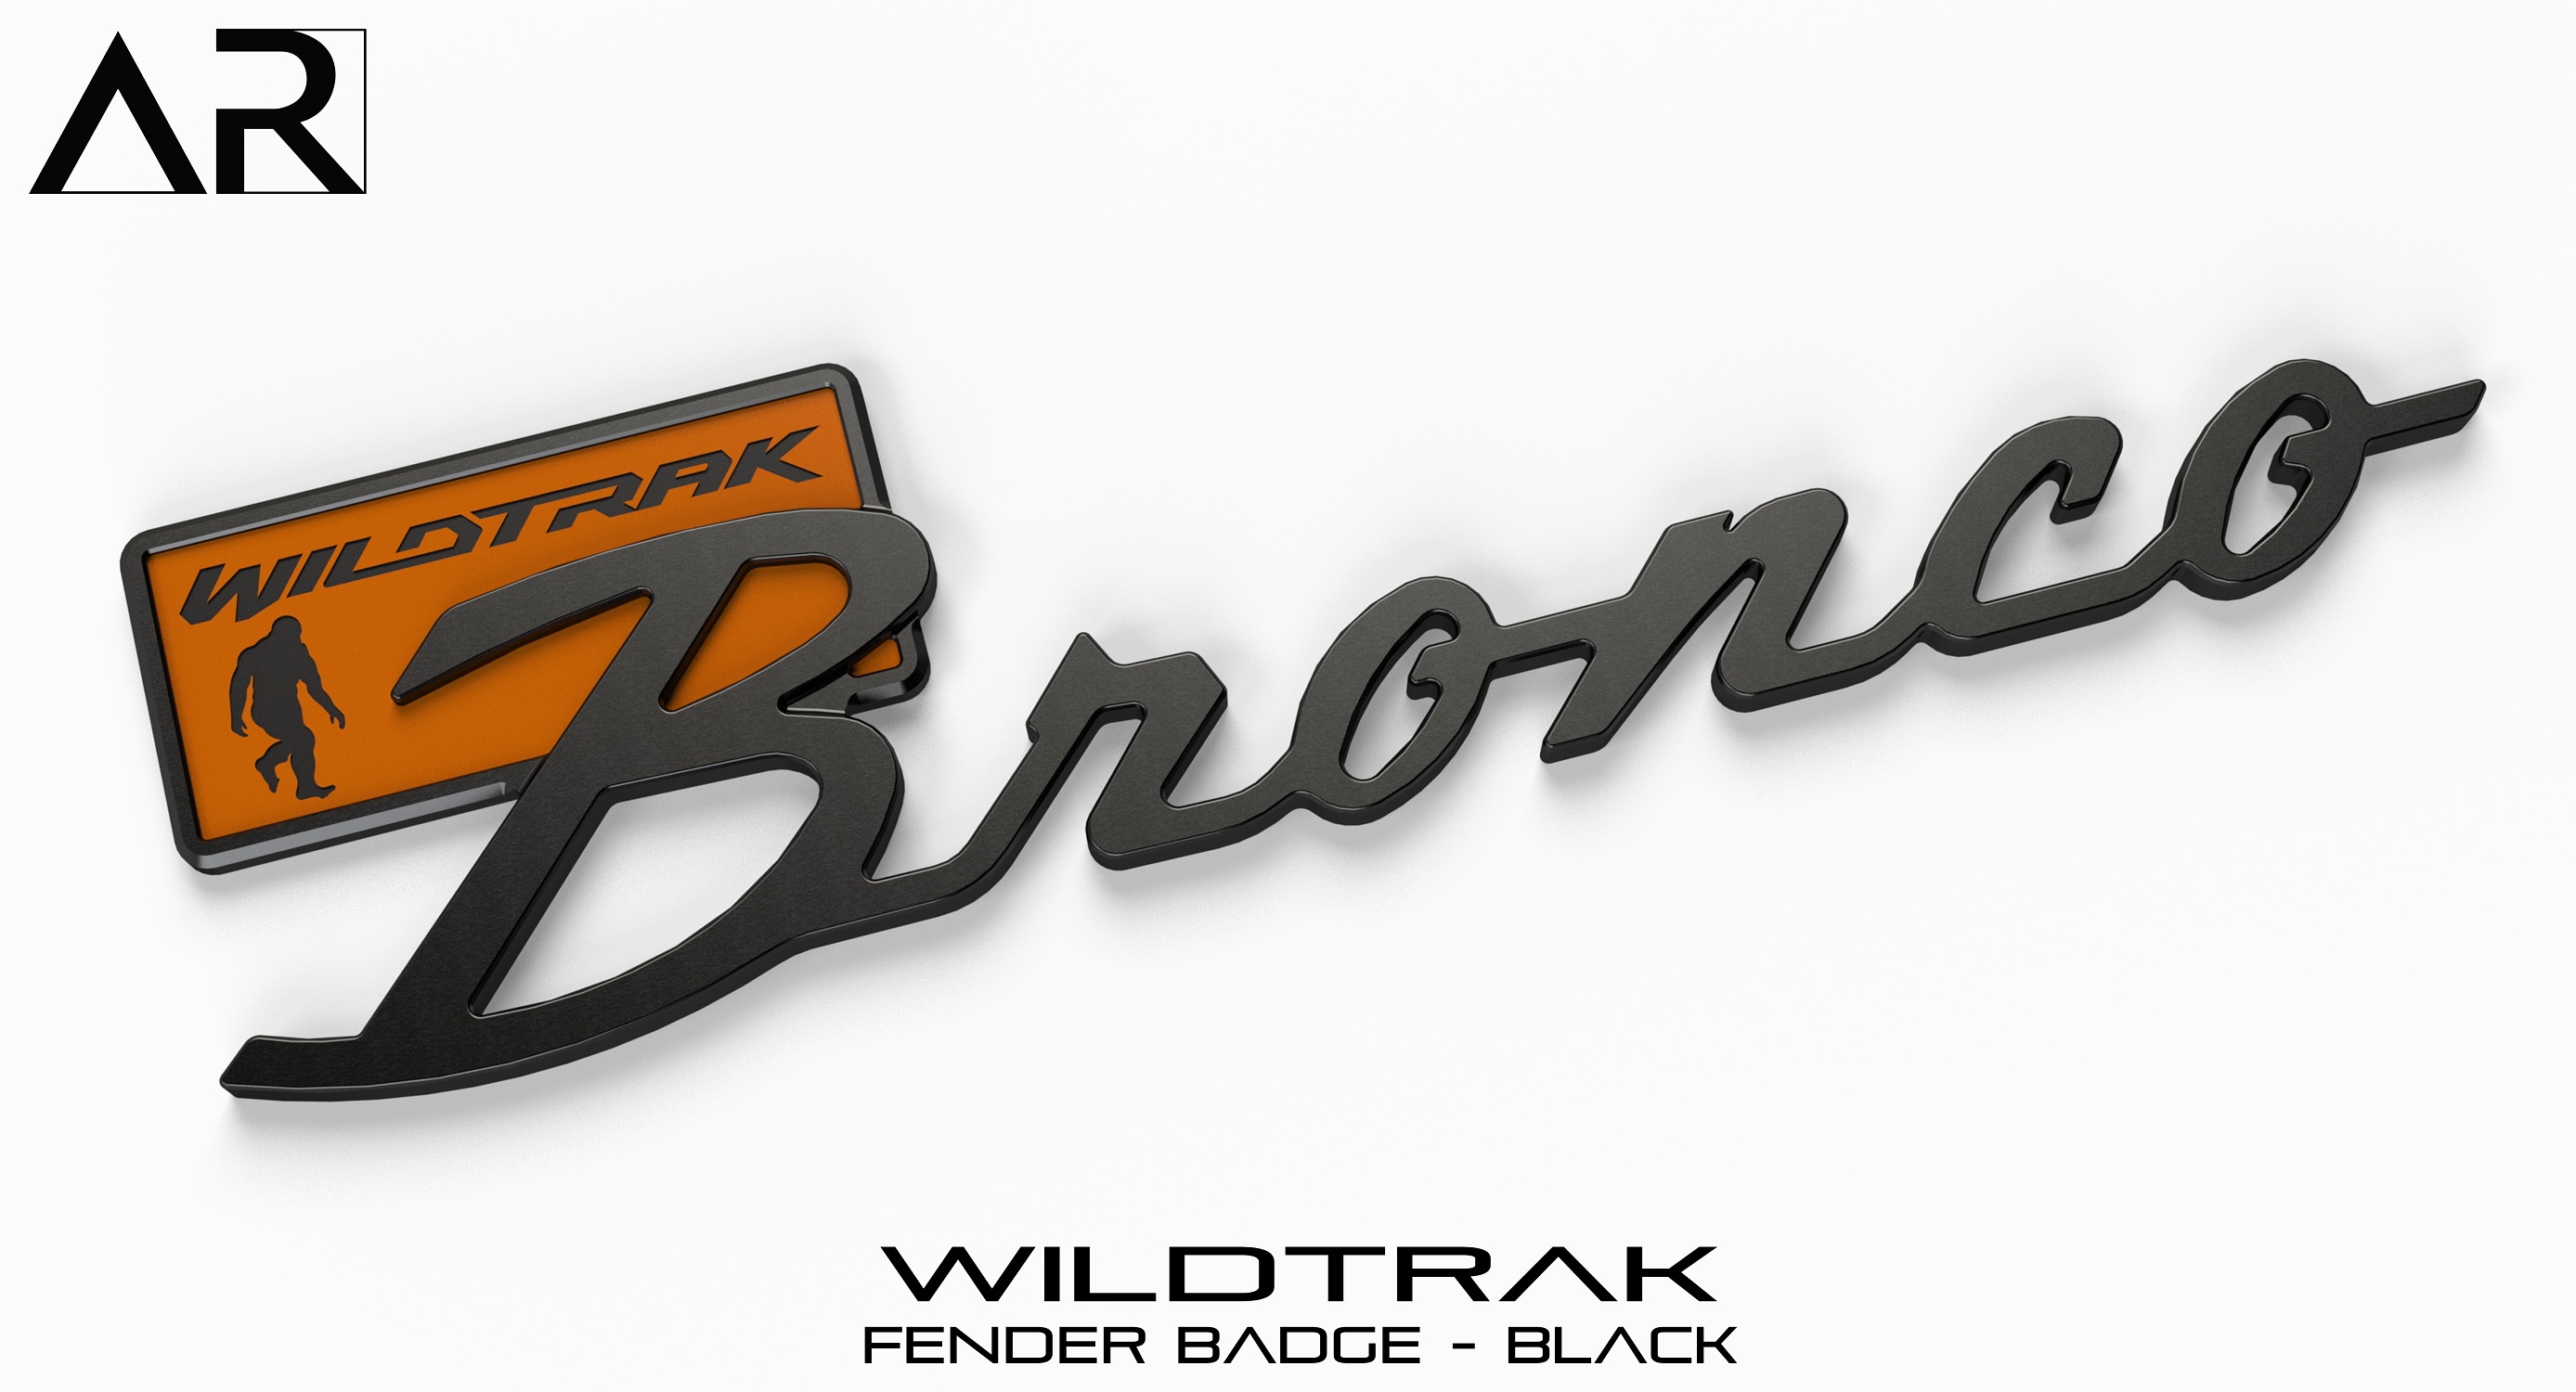 Ford Bronco AR | BRONCO CLASSIC DNA Fender Badge 1CD7CC80-F9B8-4B3F-A260-229FC2B9B2DB